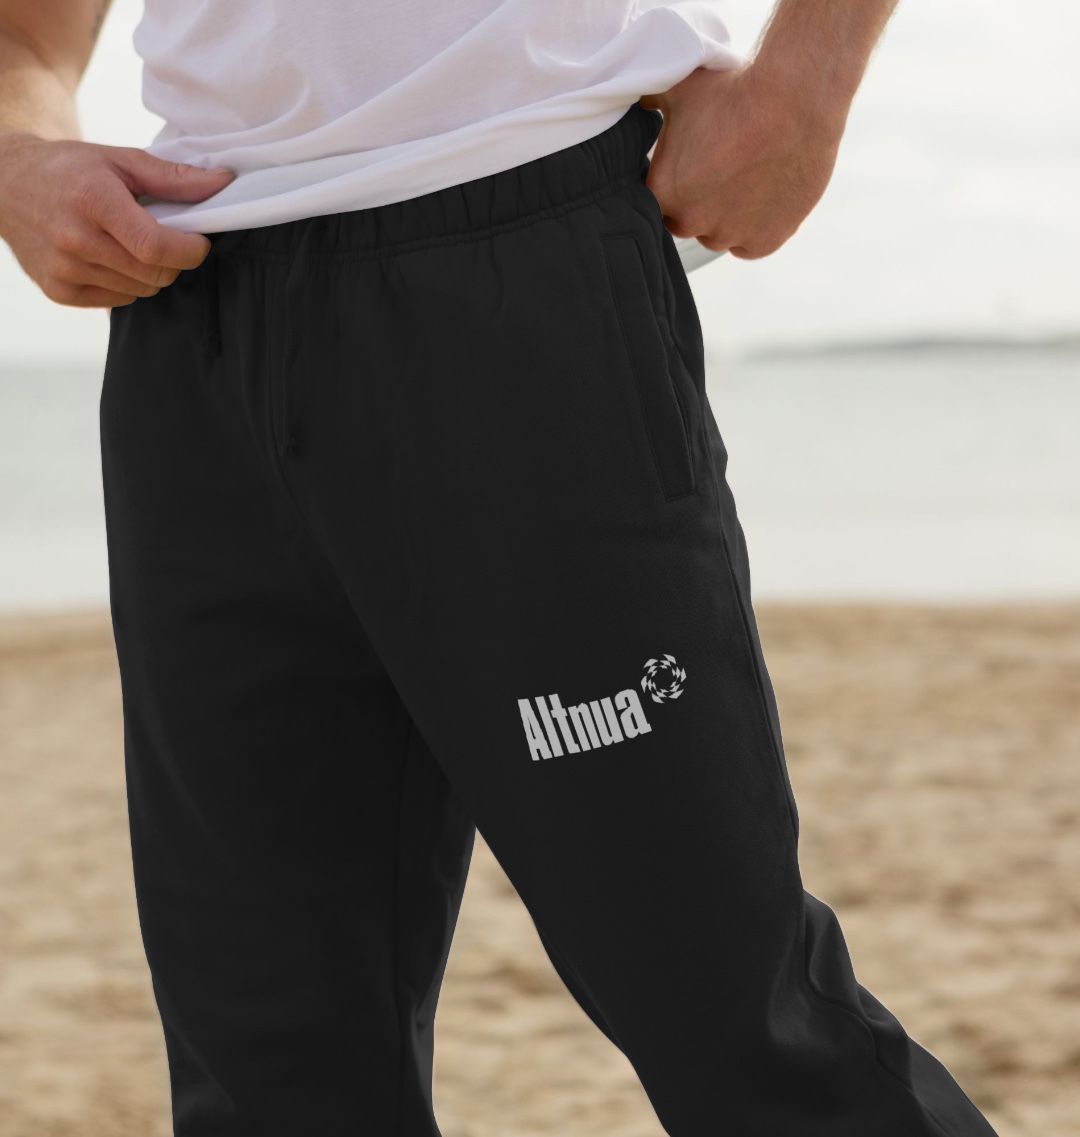 Altnua - 100% organic cotton joggers (black)